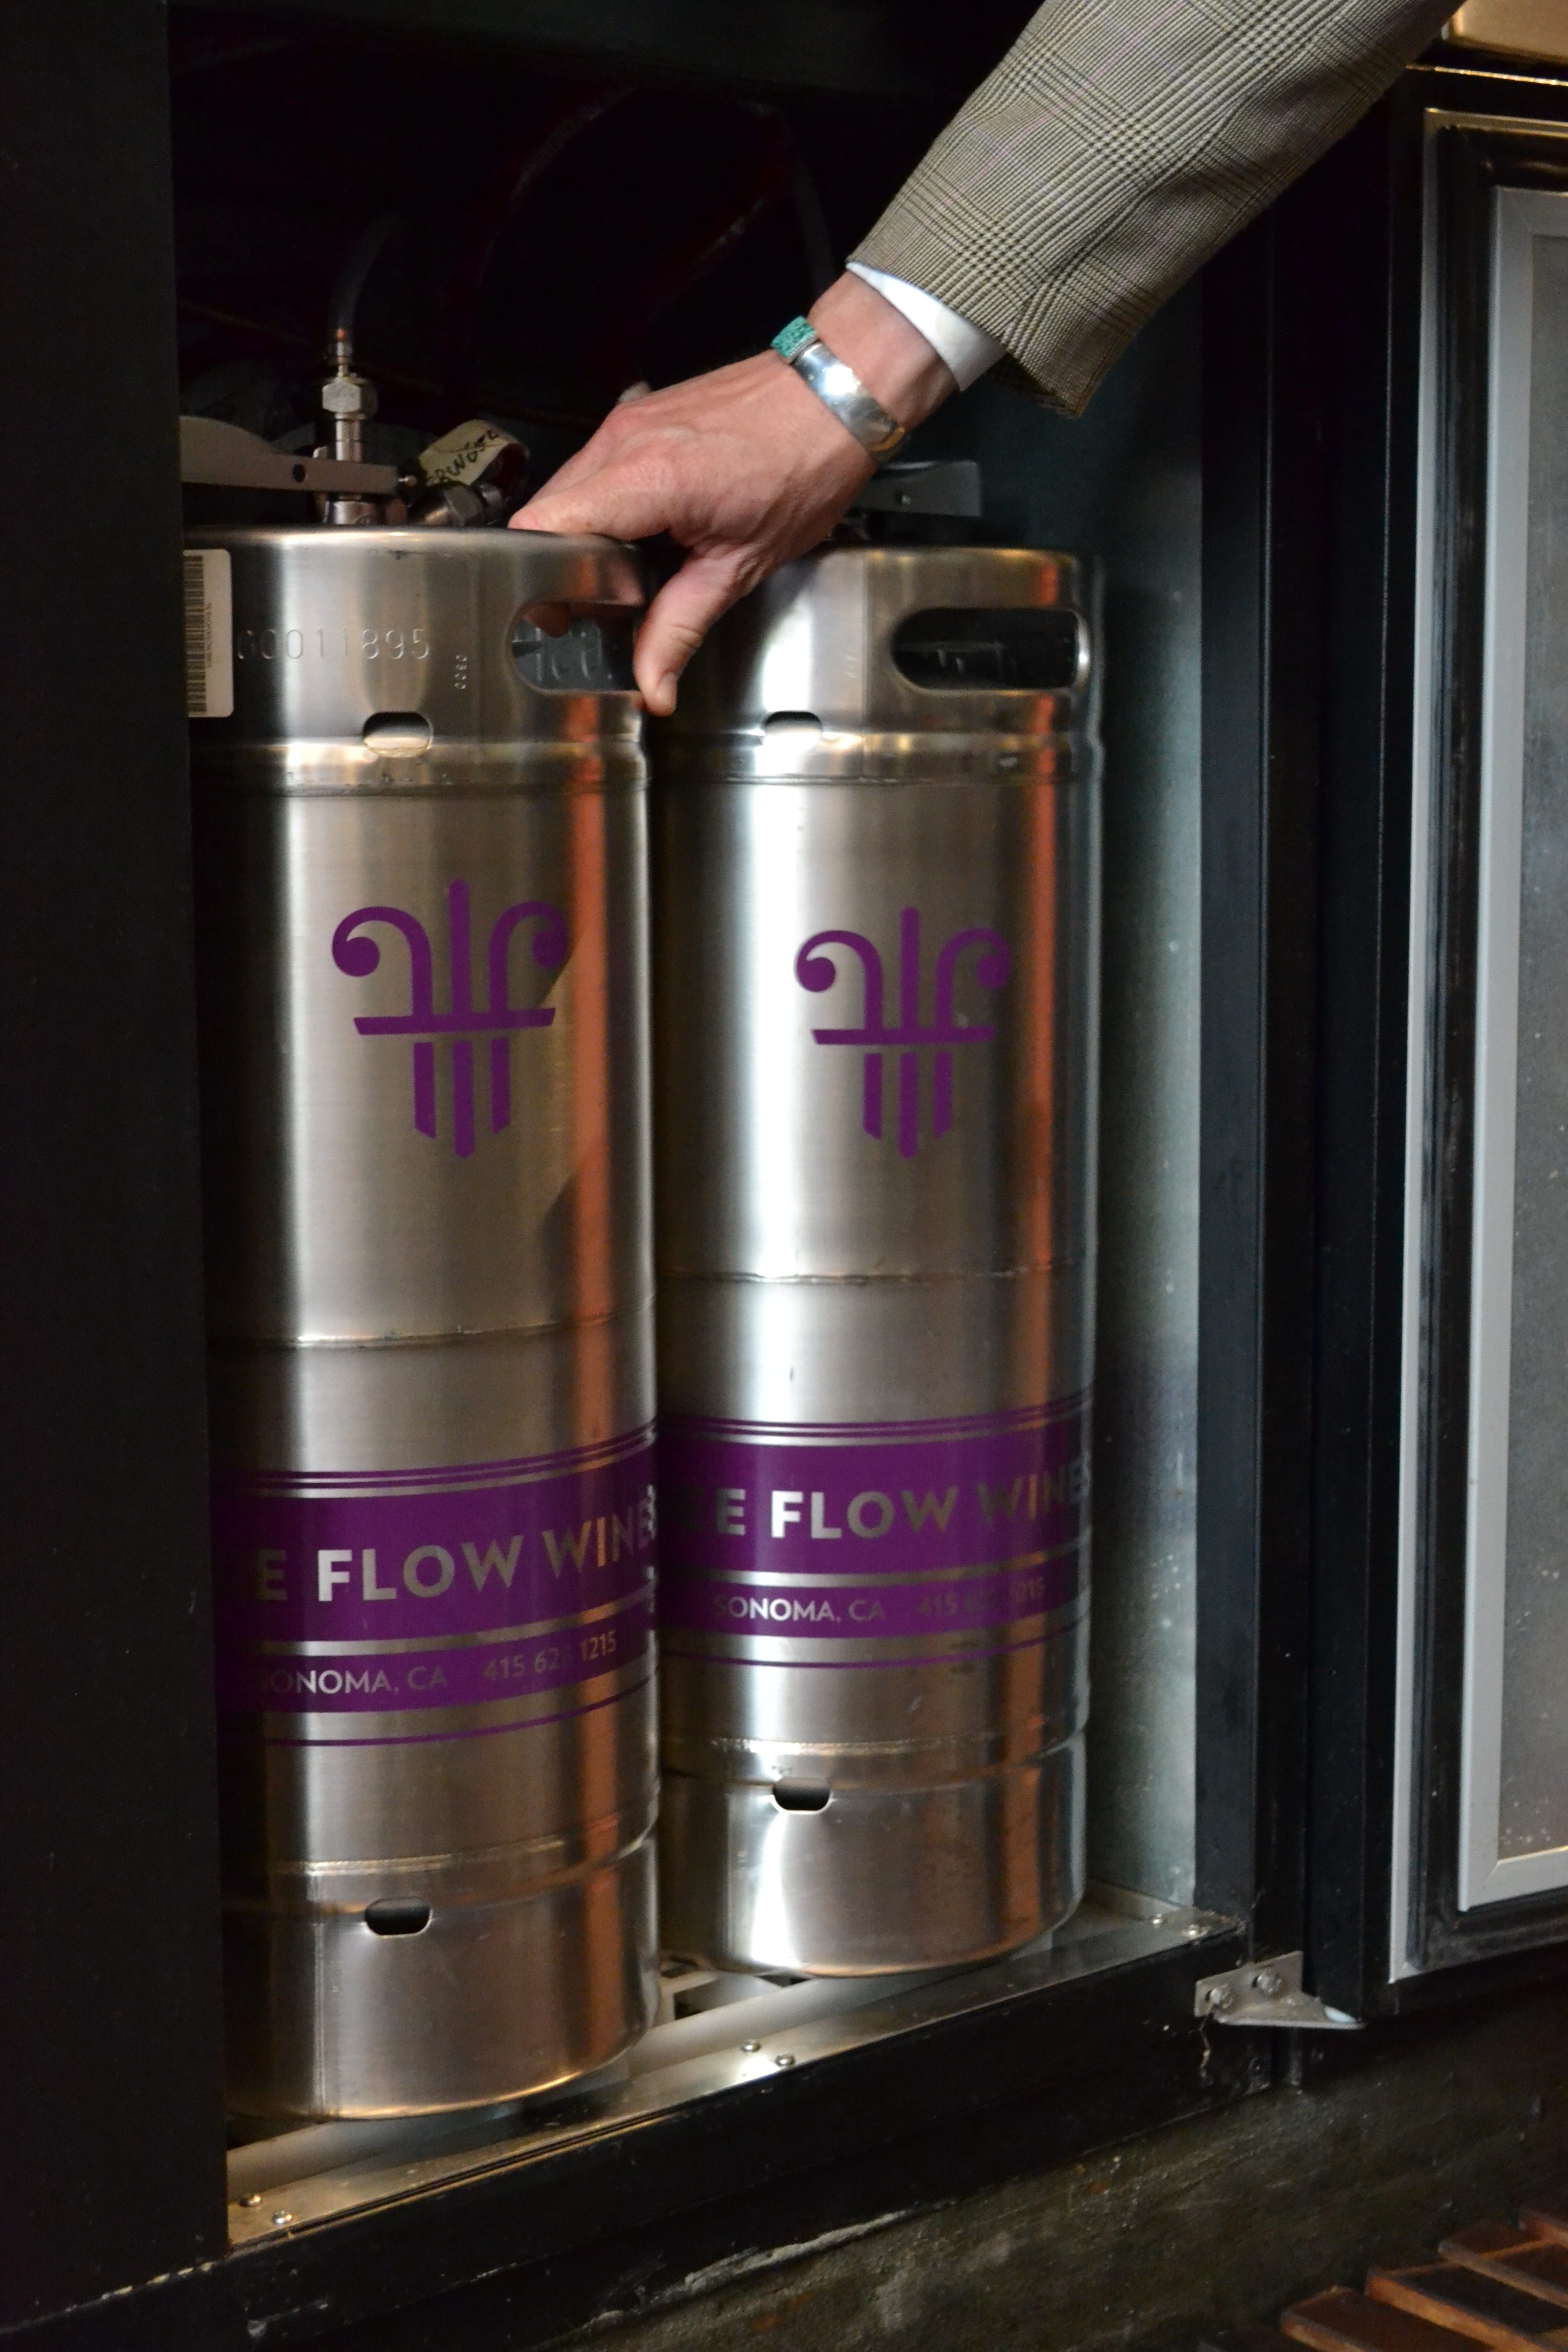 Free Flow Wines offers wine on tap in 100% reusable stainless steel kegs.